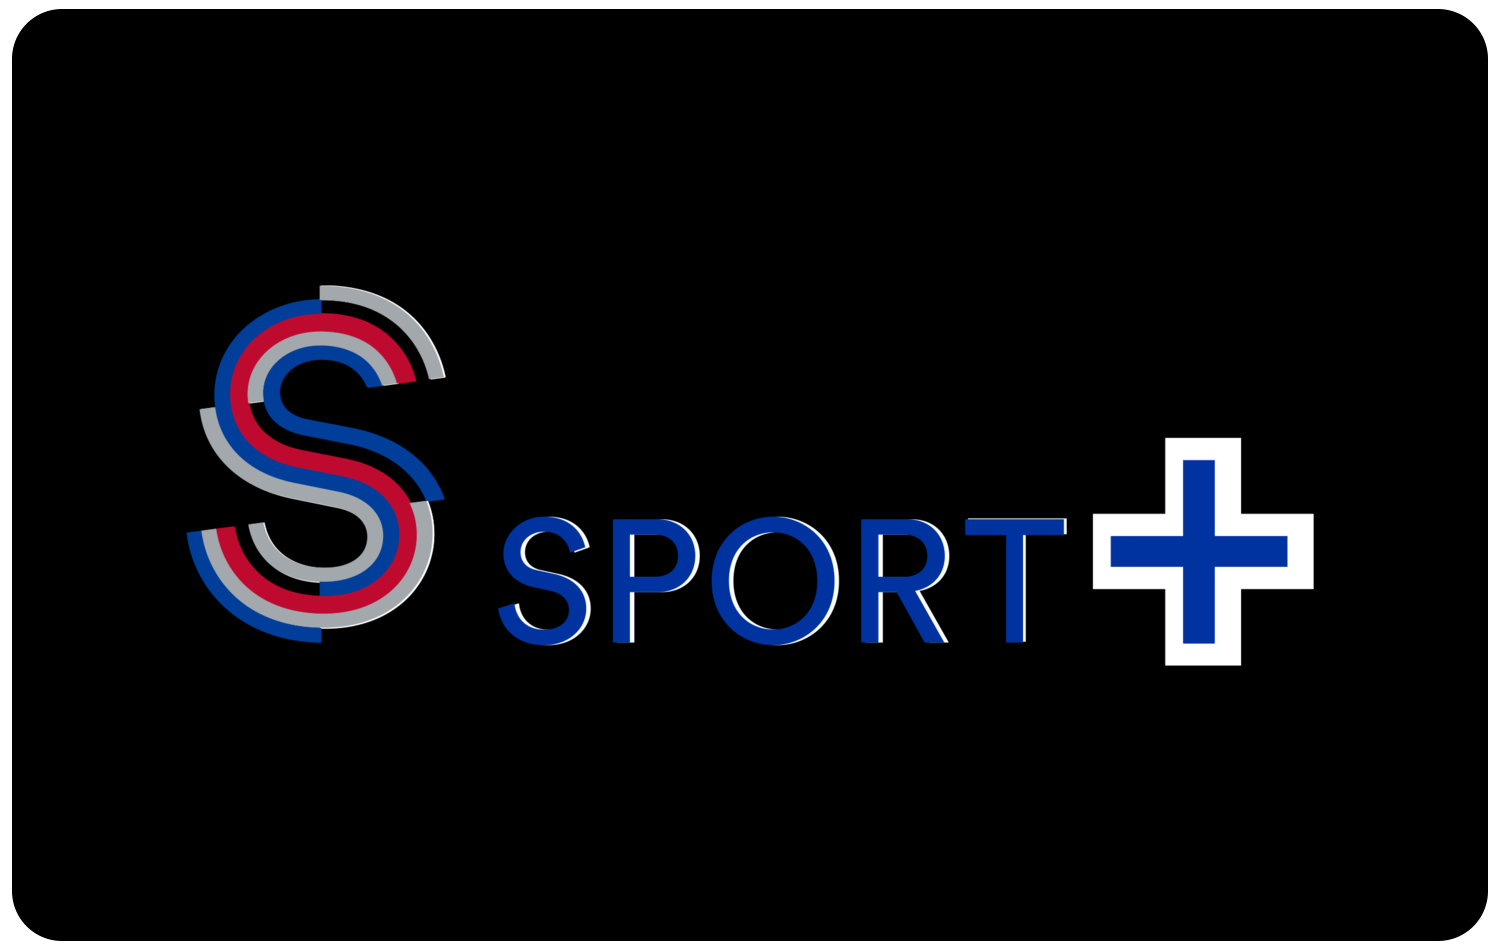 Sport plus canli izle. S Sport Plus. Sport Plus izle. Плюс логотип. S Sports Plus Canli.